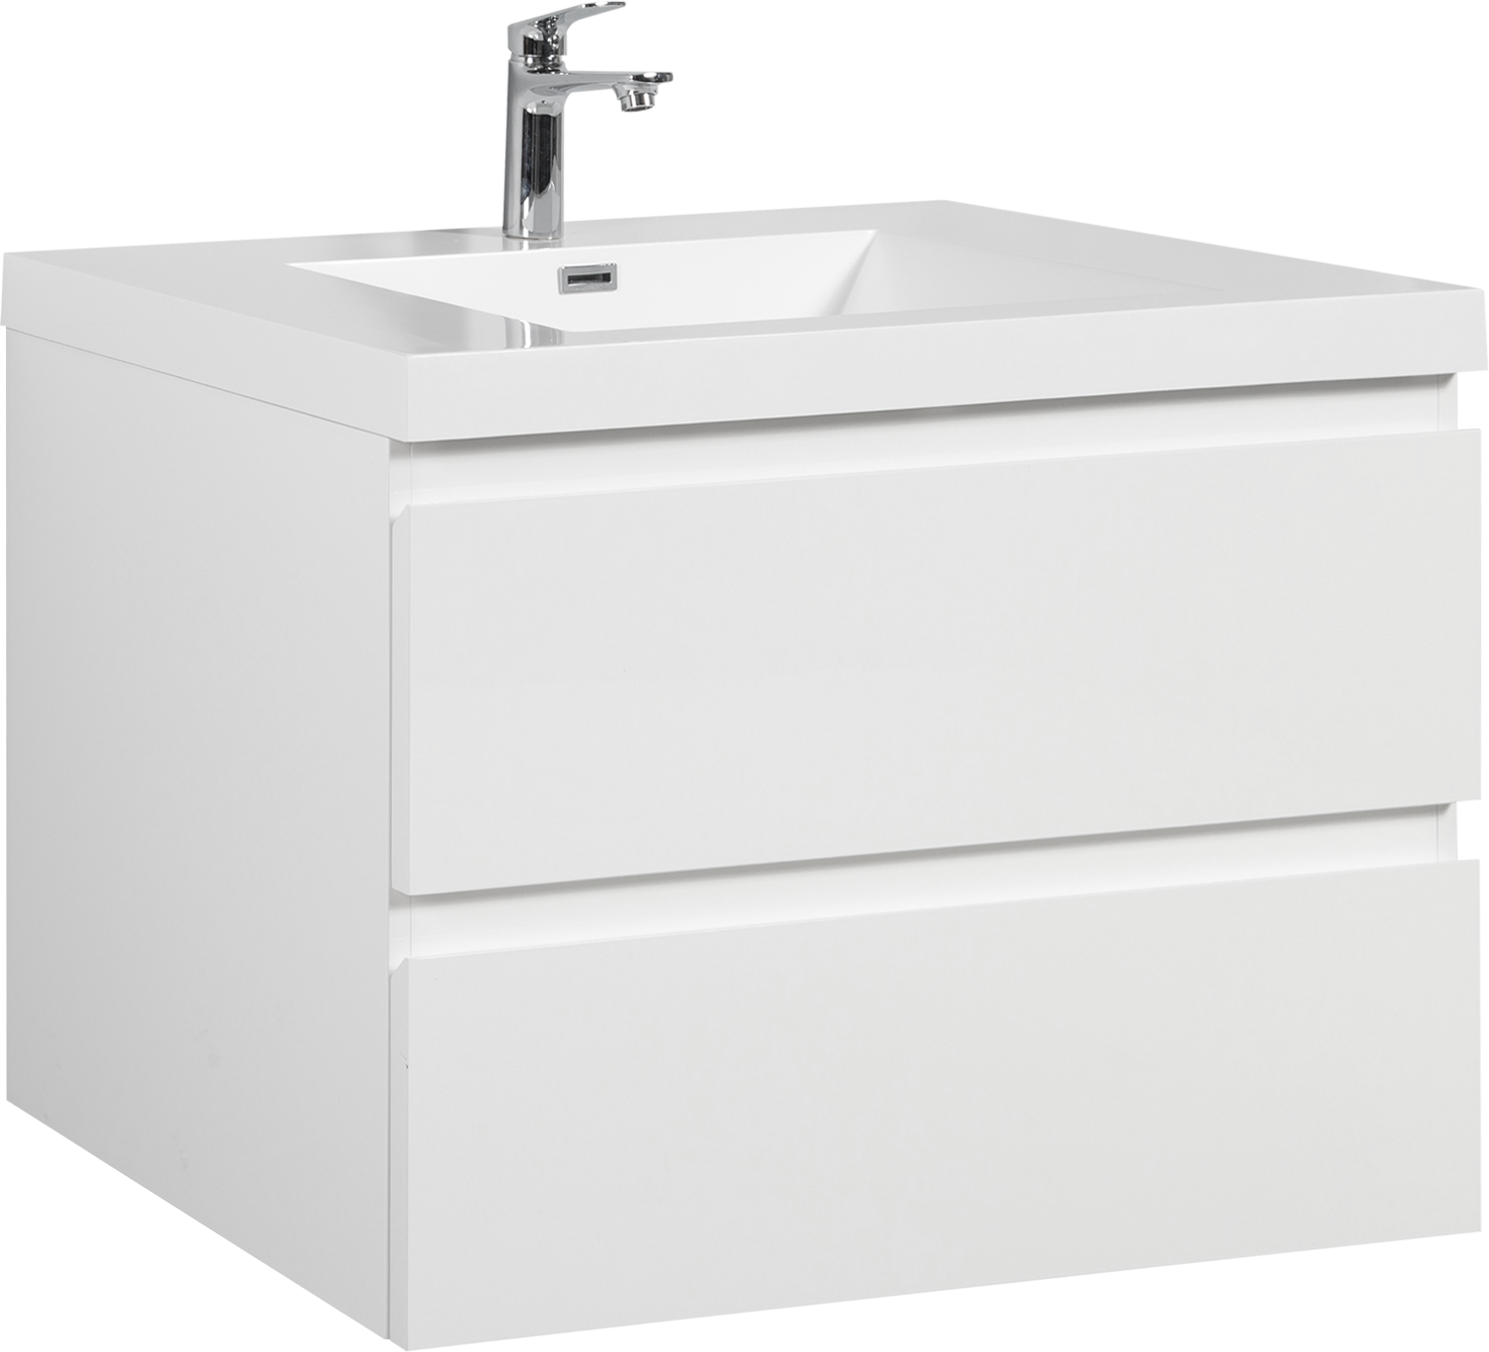 36" Floating Bathroom Vanity with Sink, Modern Wall 2-glossy white-bathroom-wall mounted-mdf